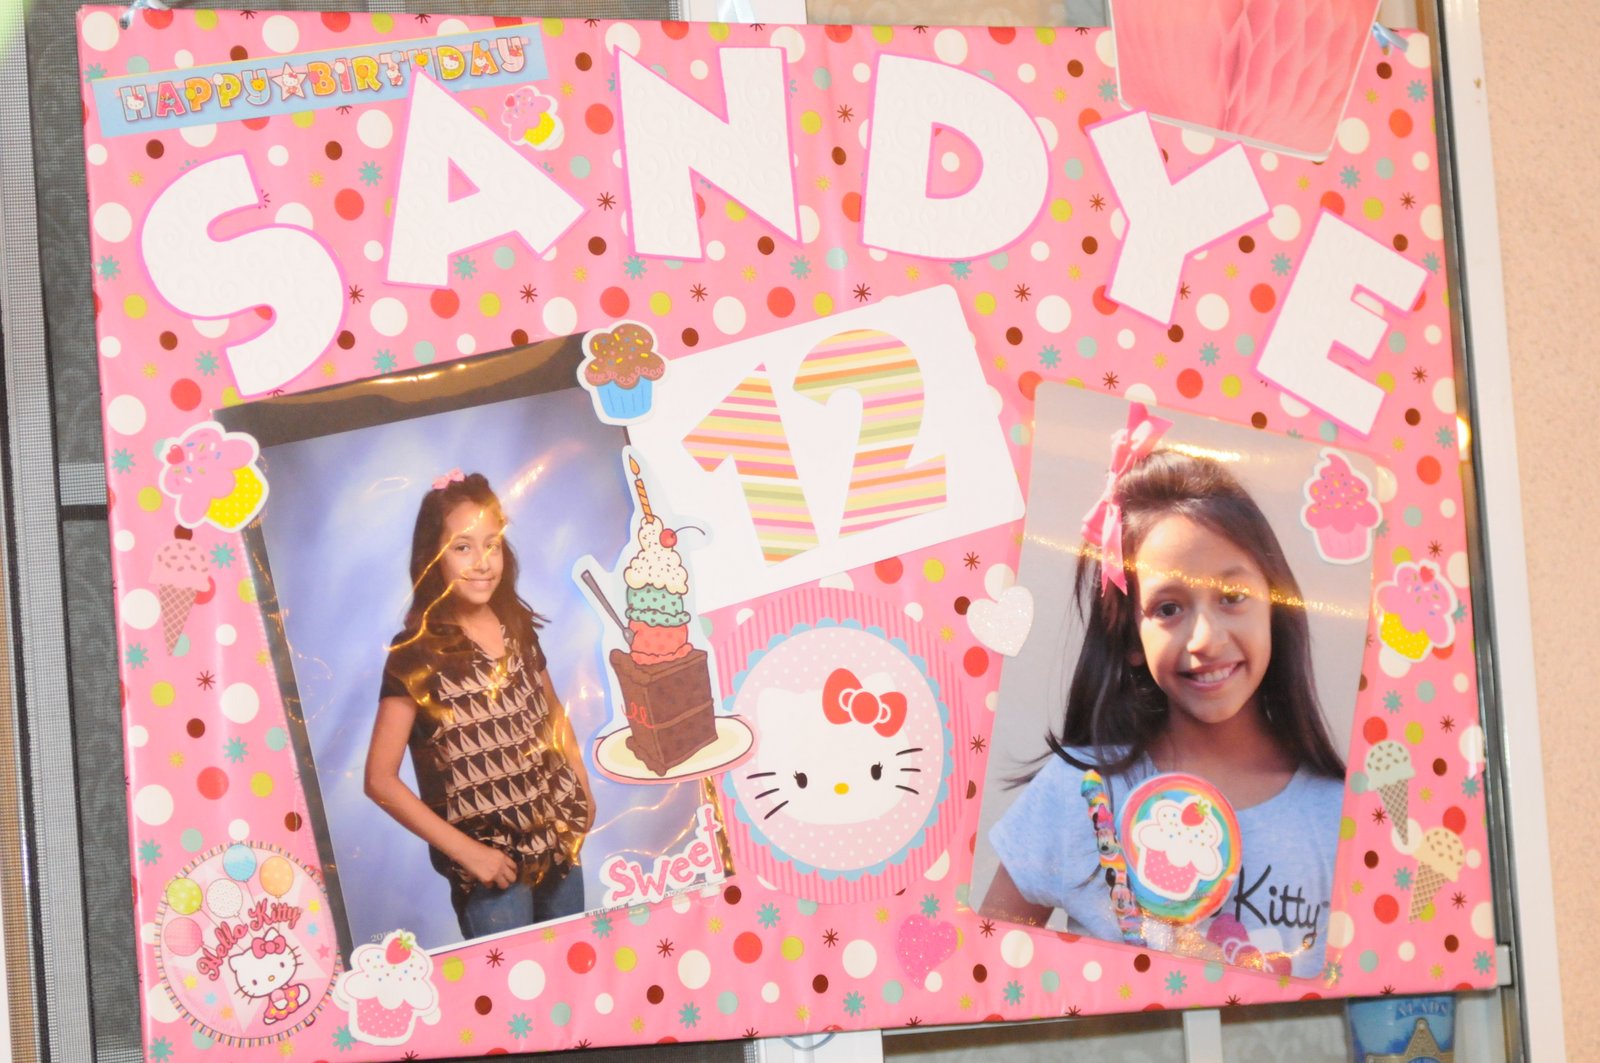 Sandye's 12th birthday party!